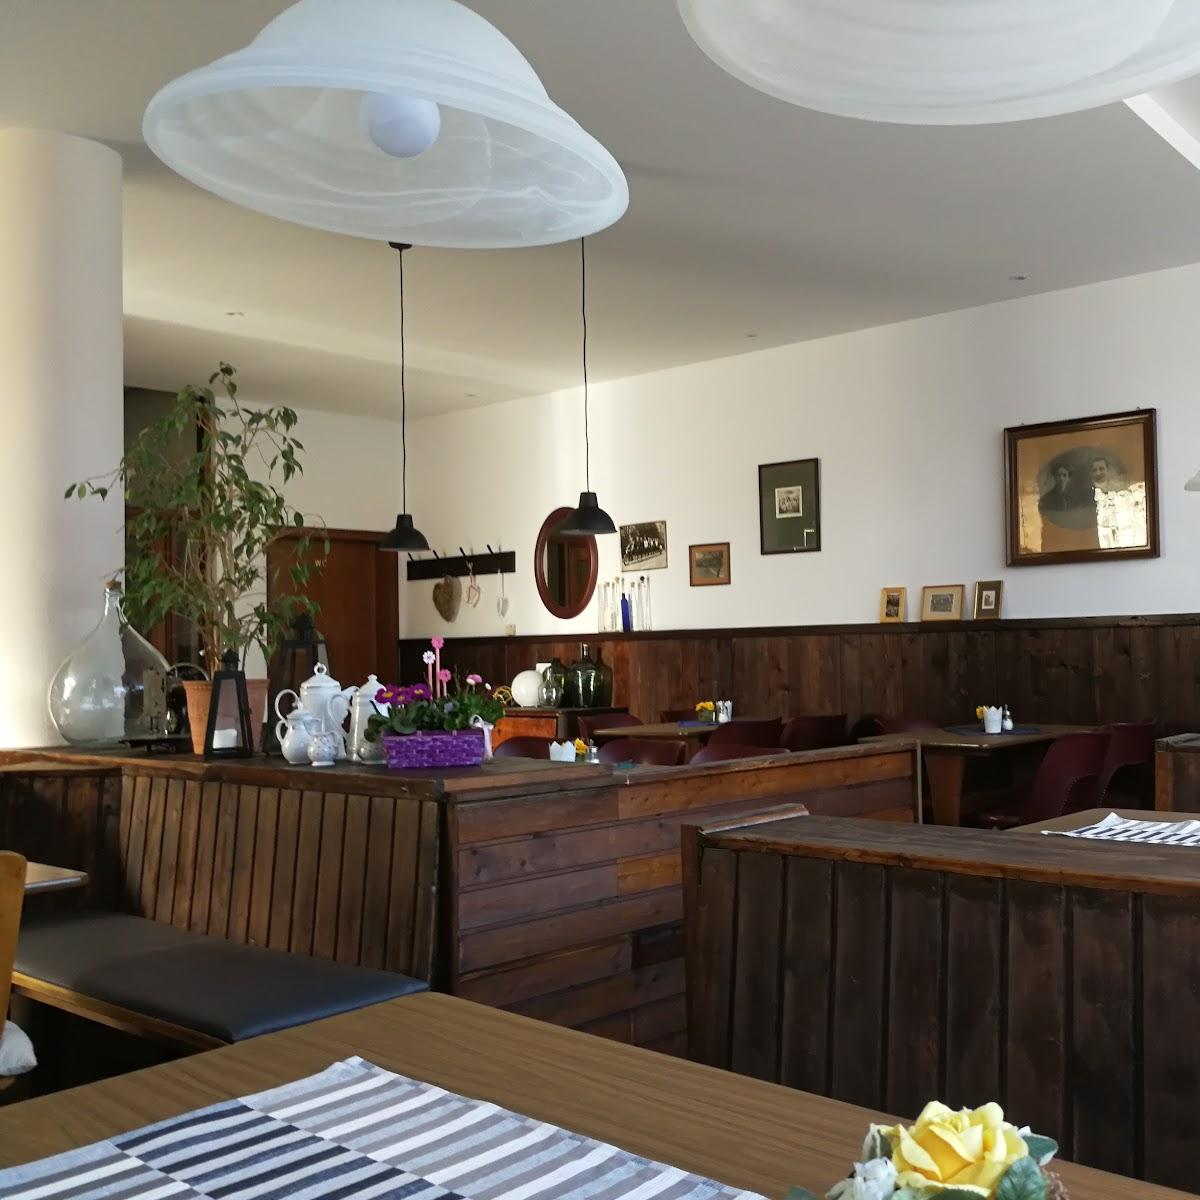 Restaurant "Ursula Weiss" in Rothenfels